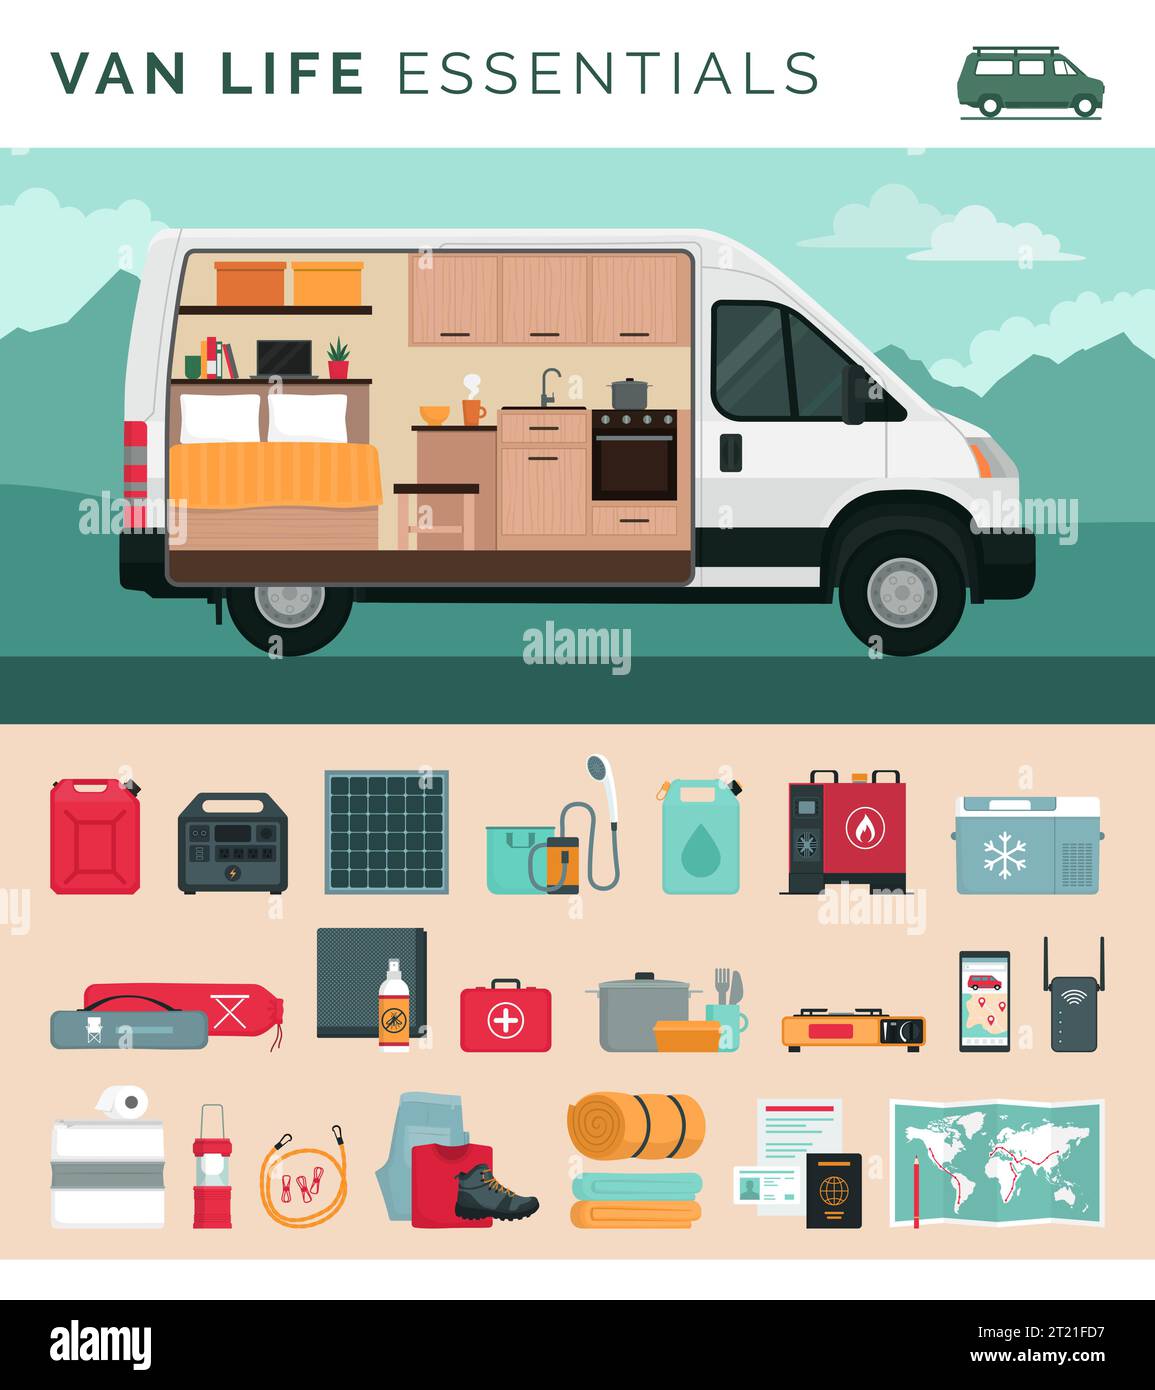 Van life essentials infographic and van interior, travel and lifestyle concept Stock Vector